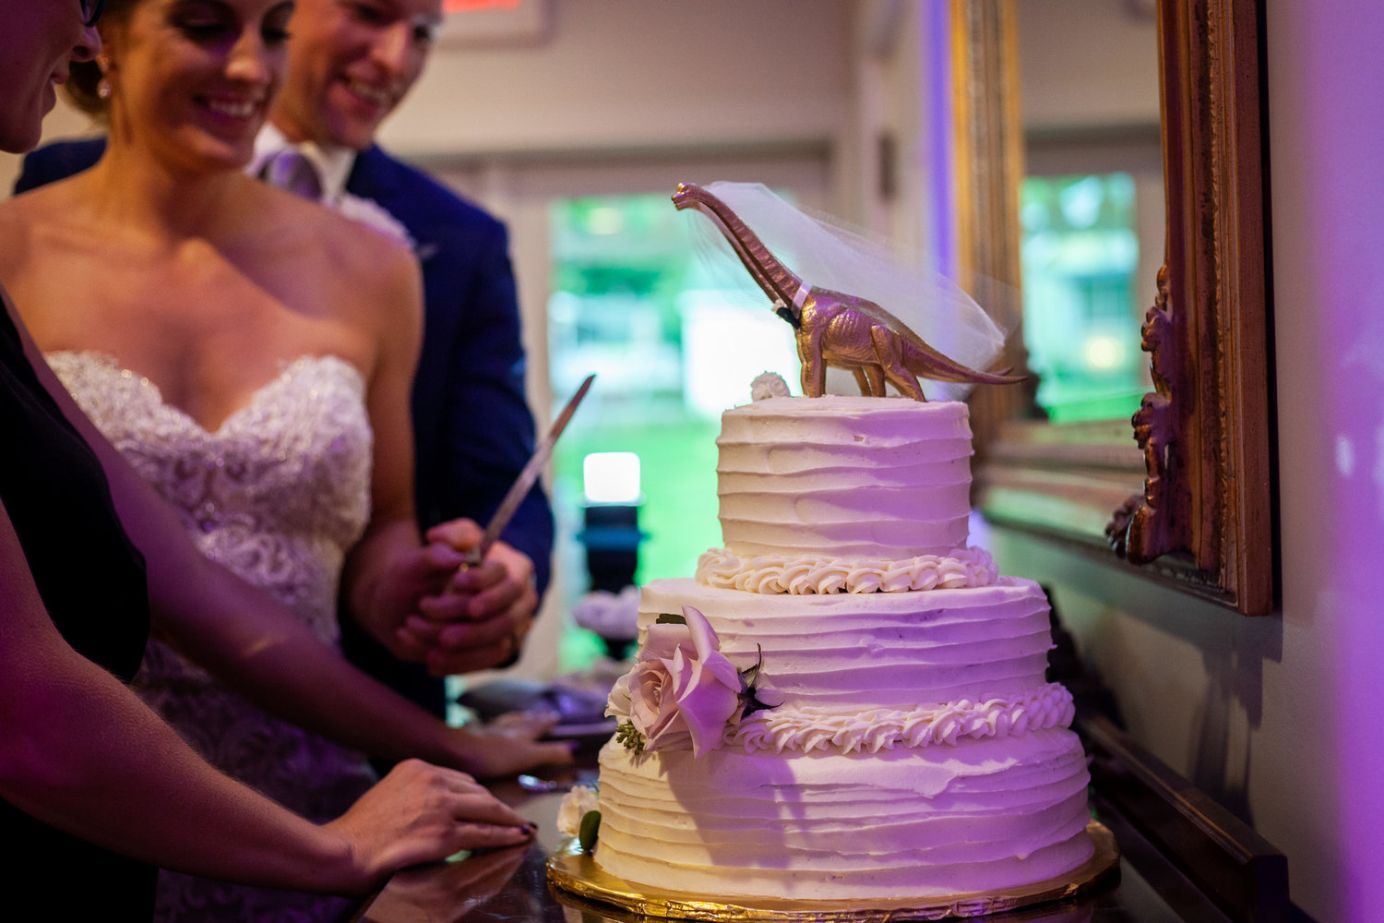 Stonegate Manor & Gardens Michigan wedding venue - wedding couple cutting cake with dinosaur on top